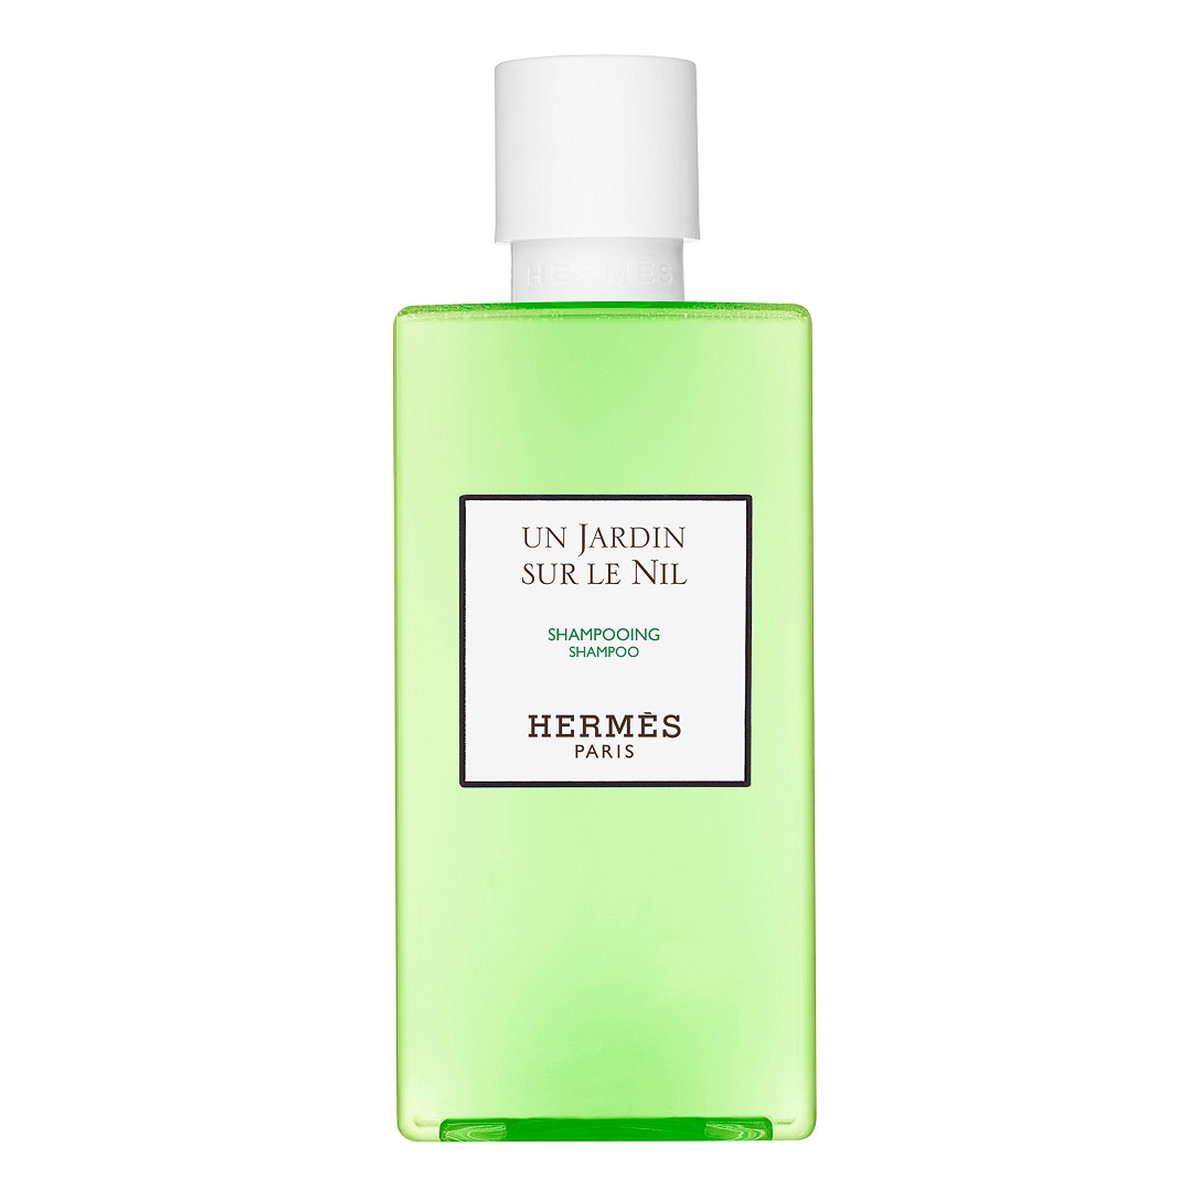 Hermes Un jardin sur le nil szampon do włosów tester 200ml